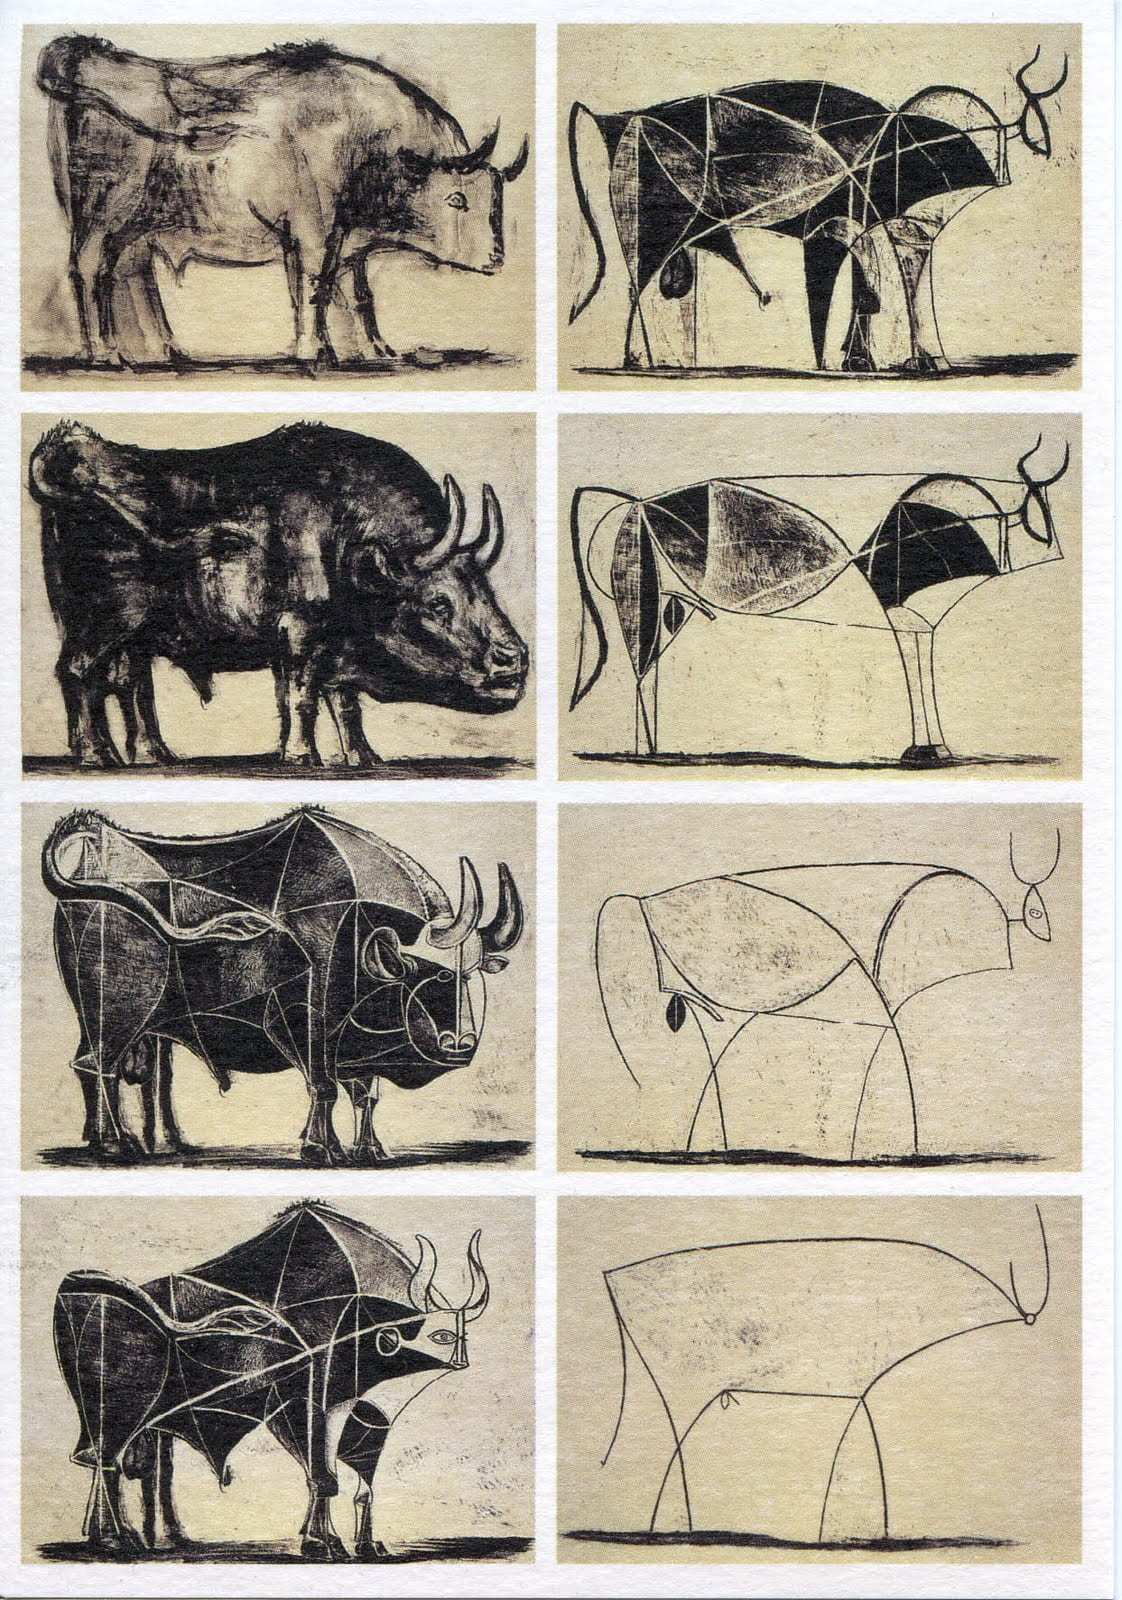 Picasso's Bulls